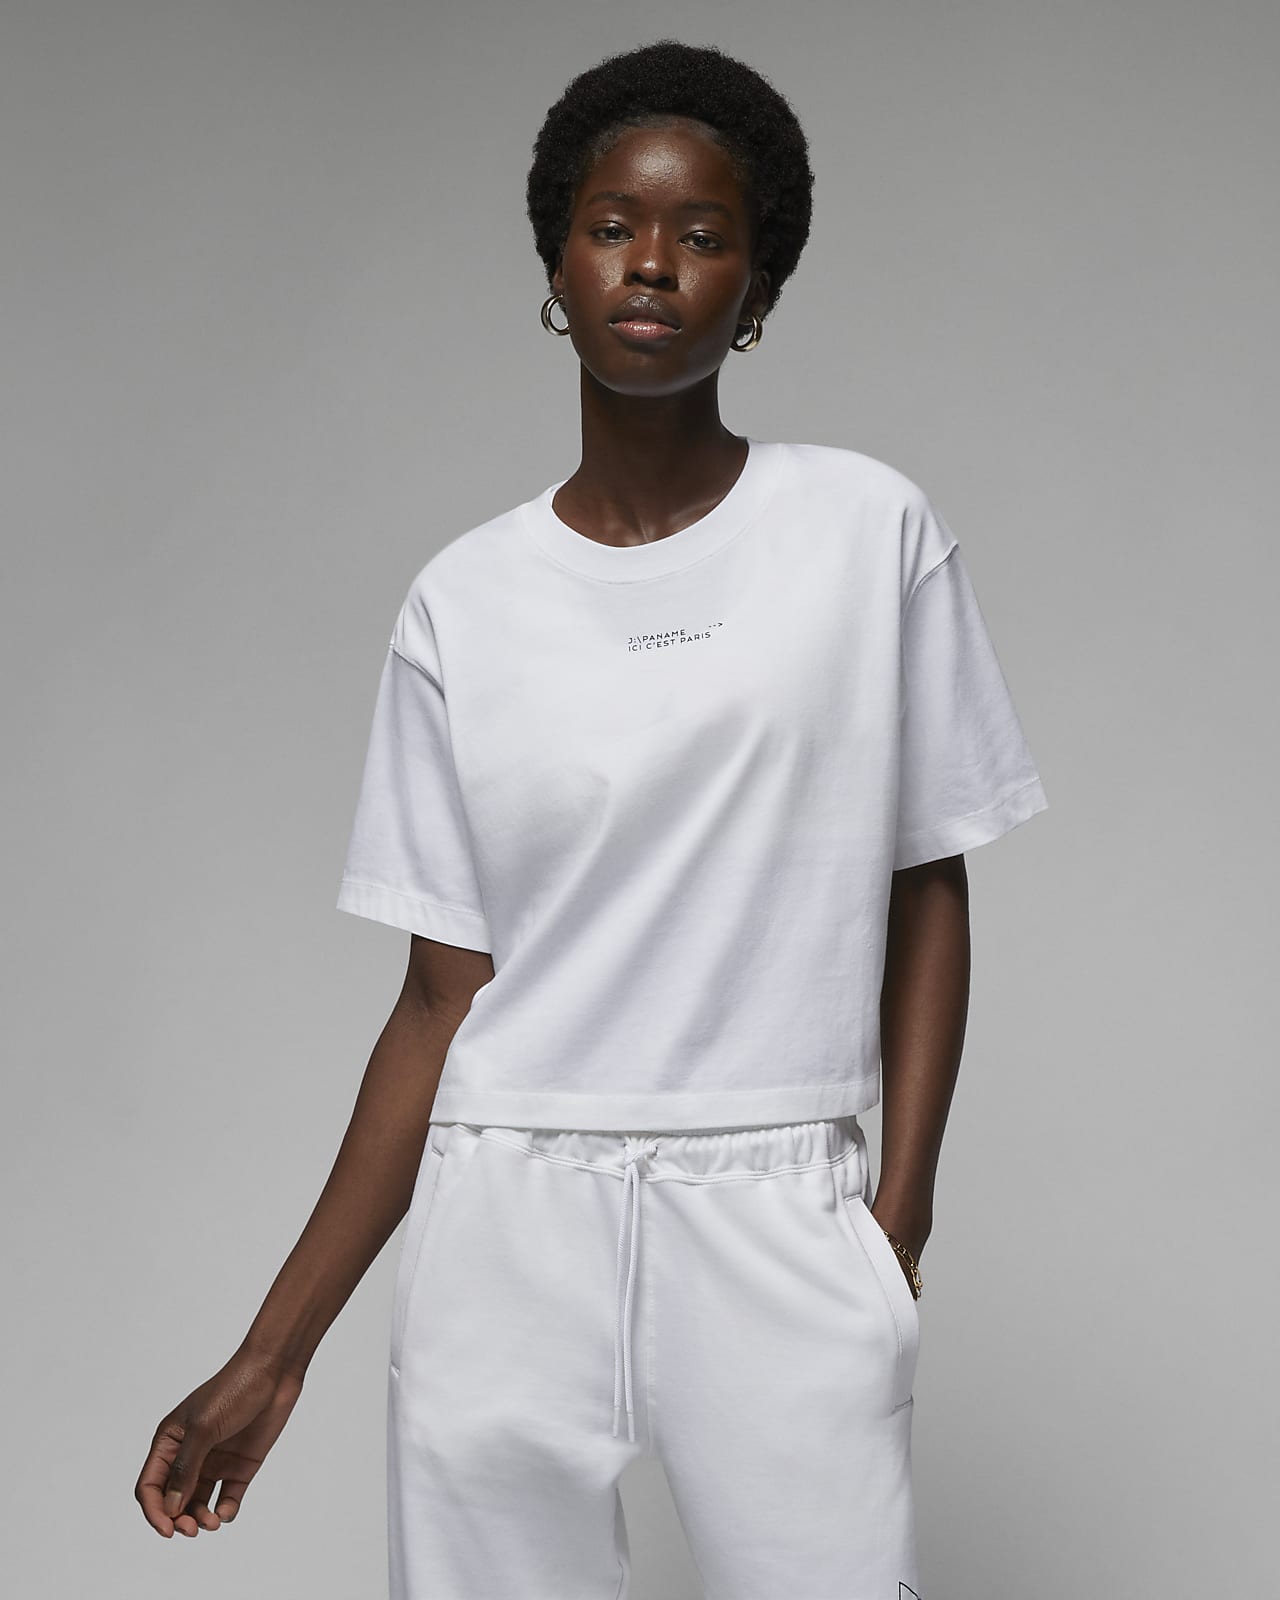 París Saint-Germain Camiseta estampado - Mujer. Nike ES